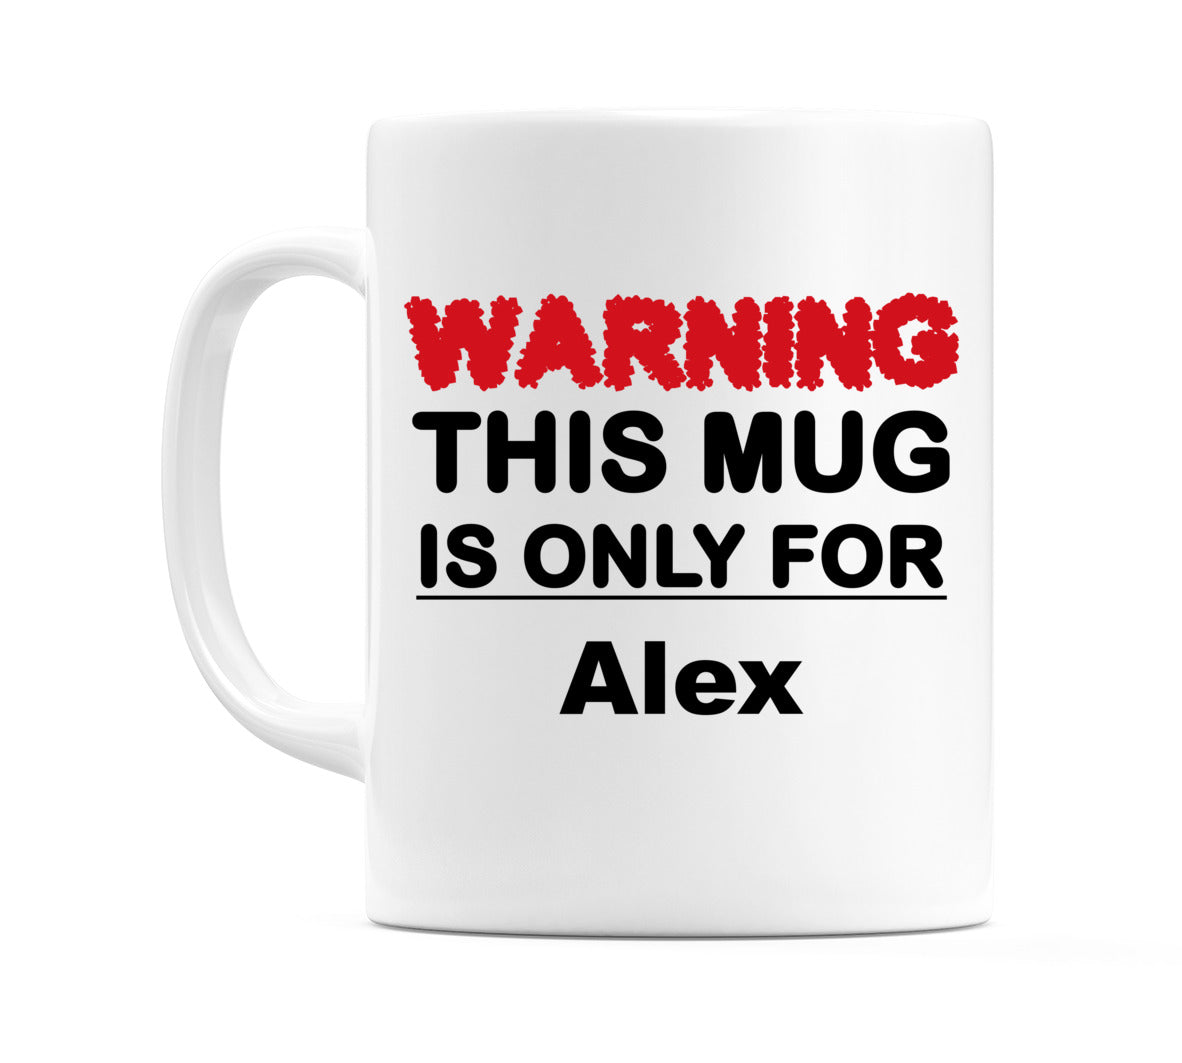 Warning This Mug is ONLY for Alex Mug